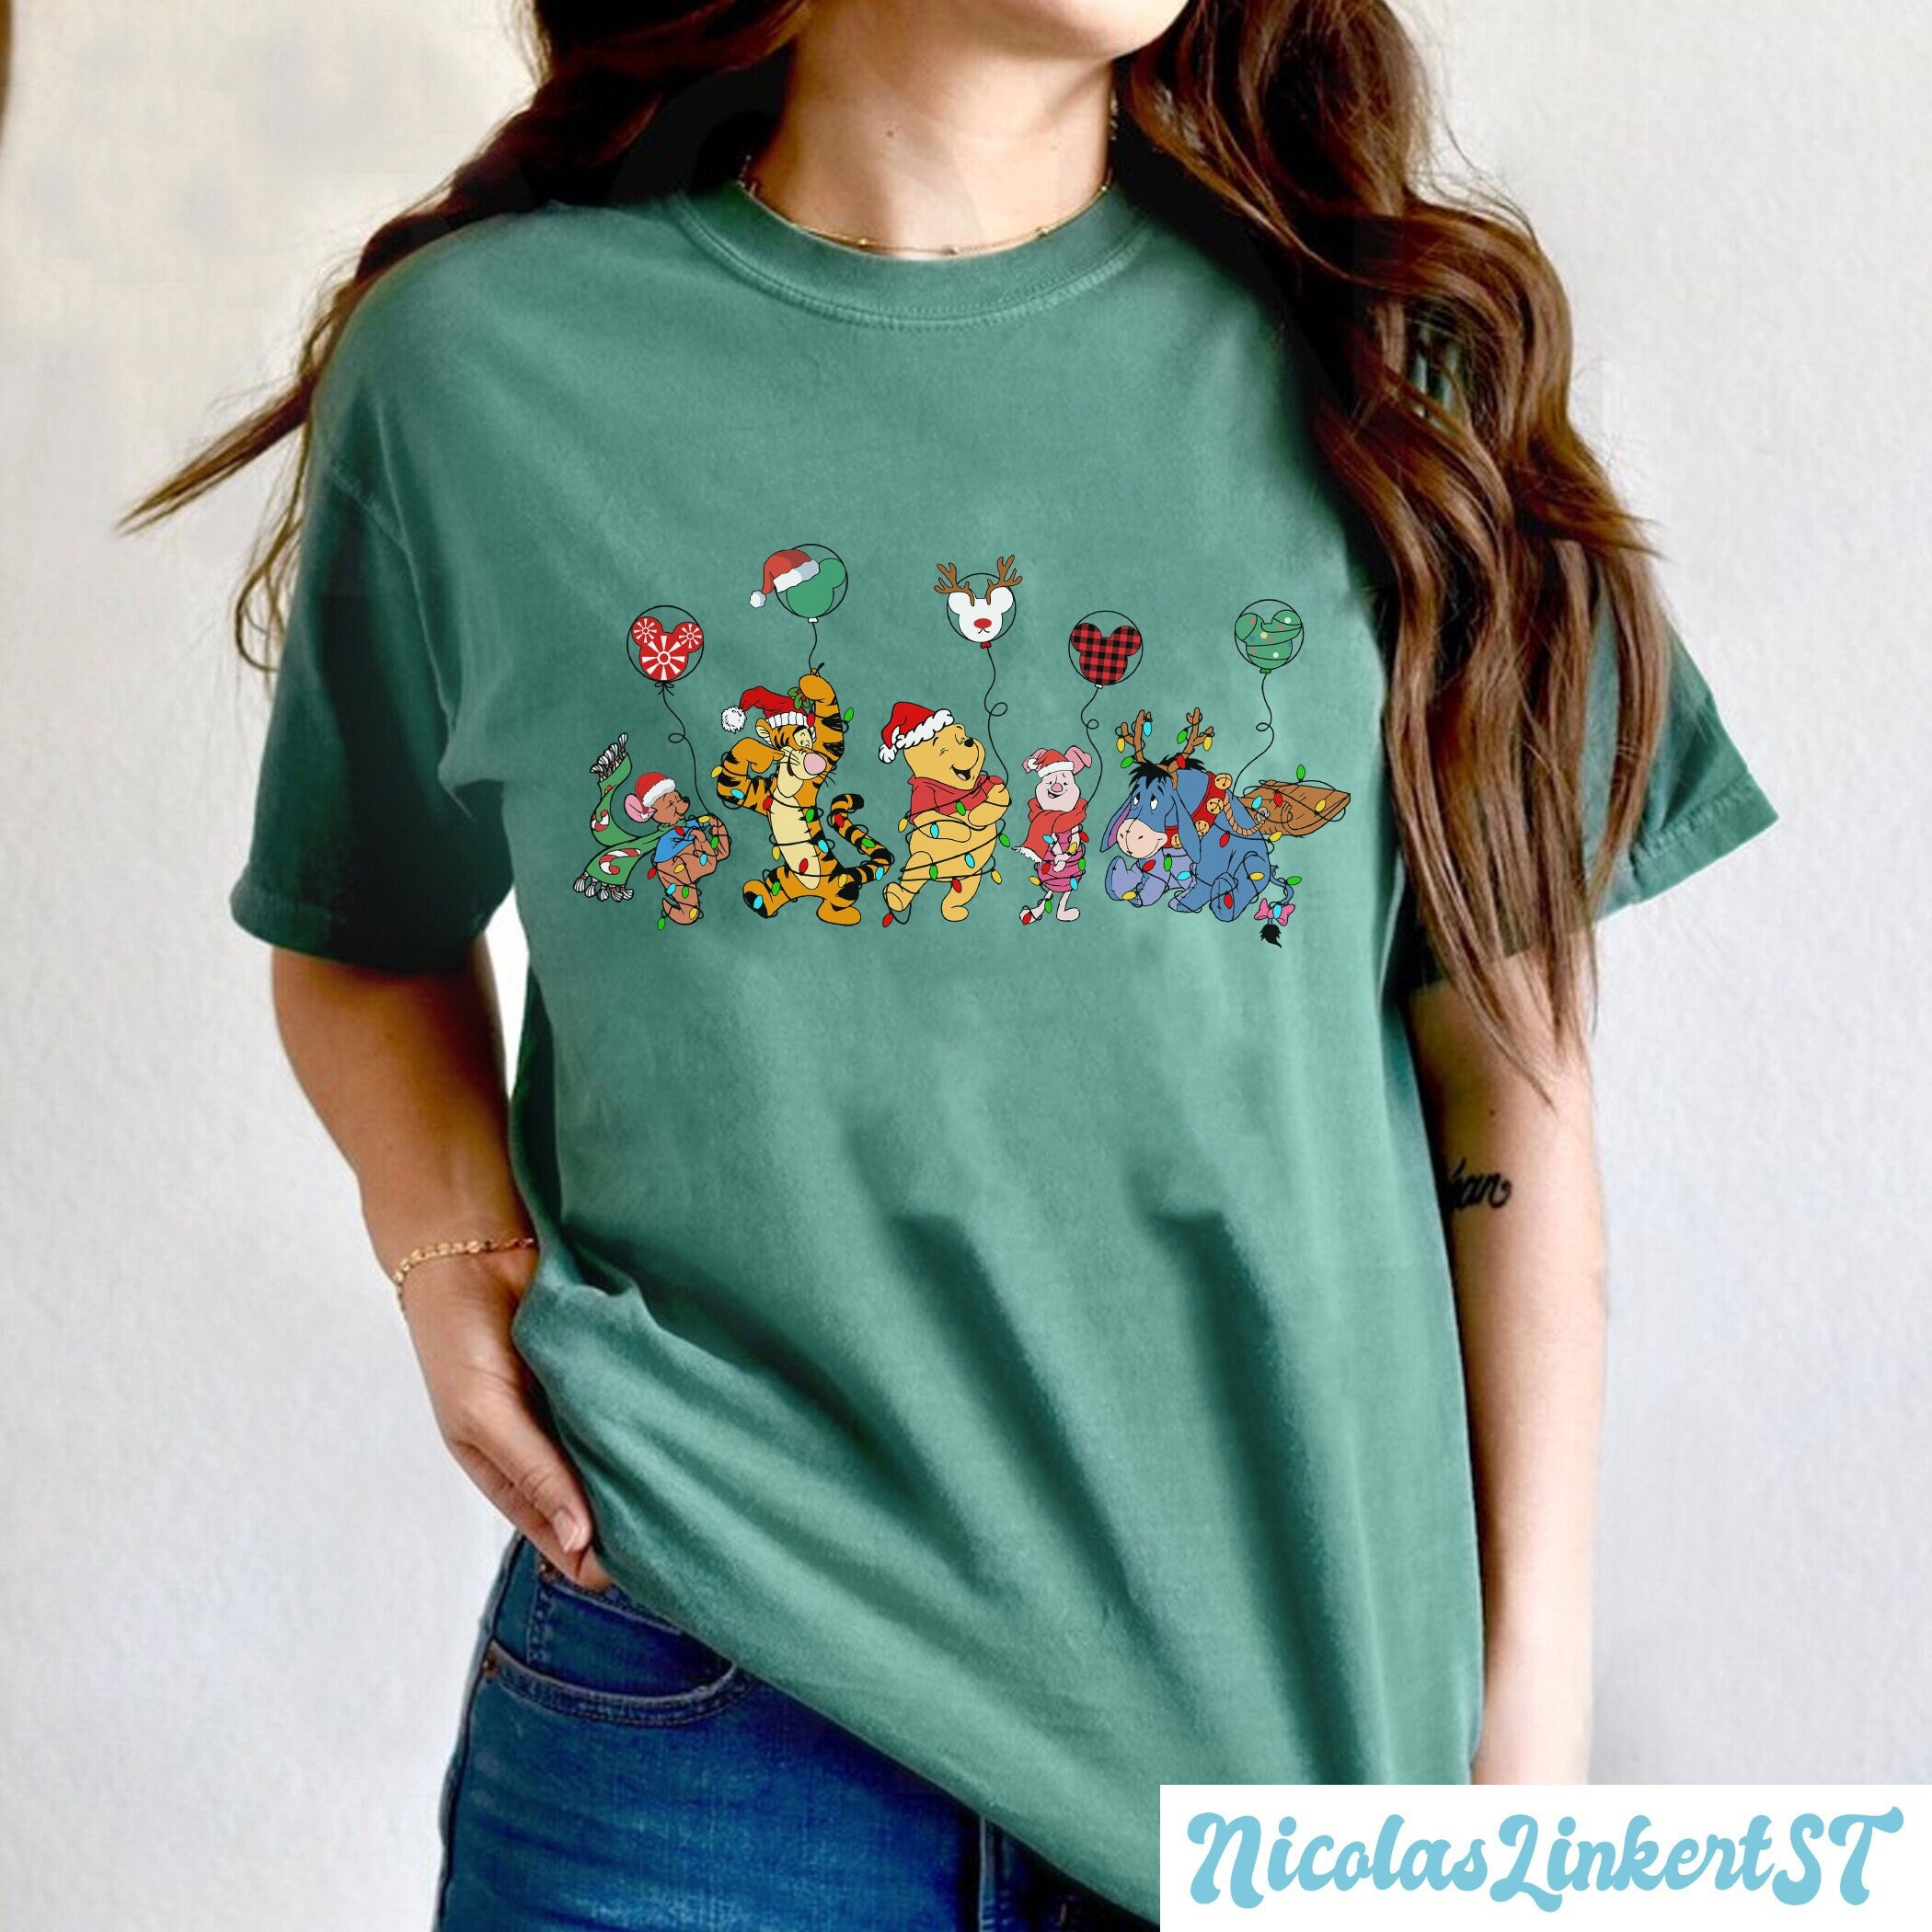 Discover Disney Winnie The Pooh Christmas Shirt, Pooh Bear shirt